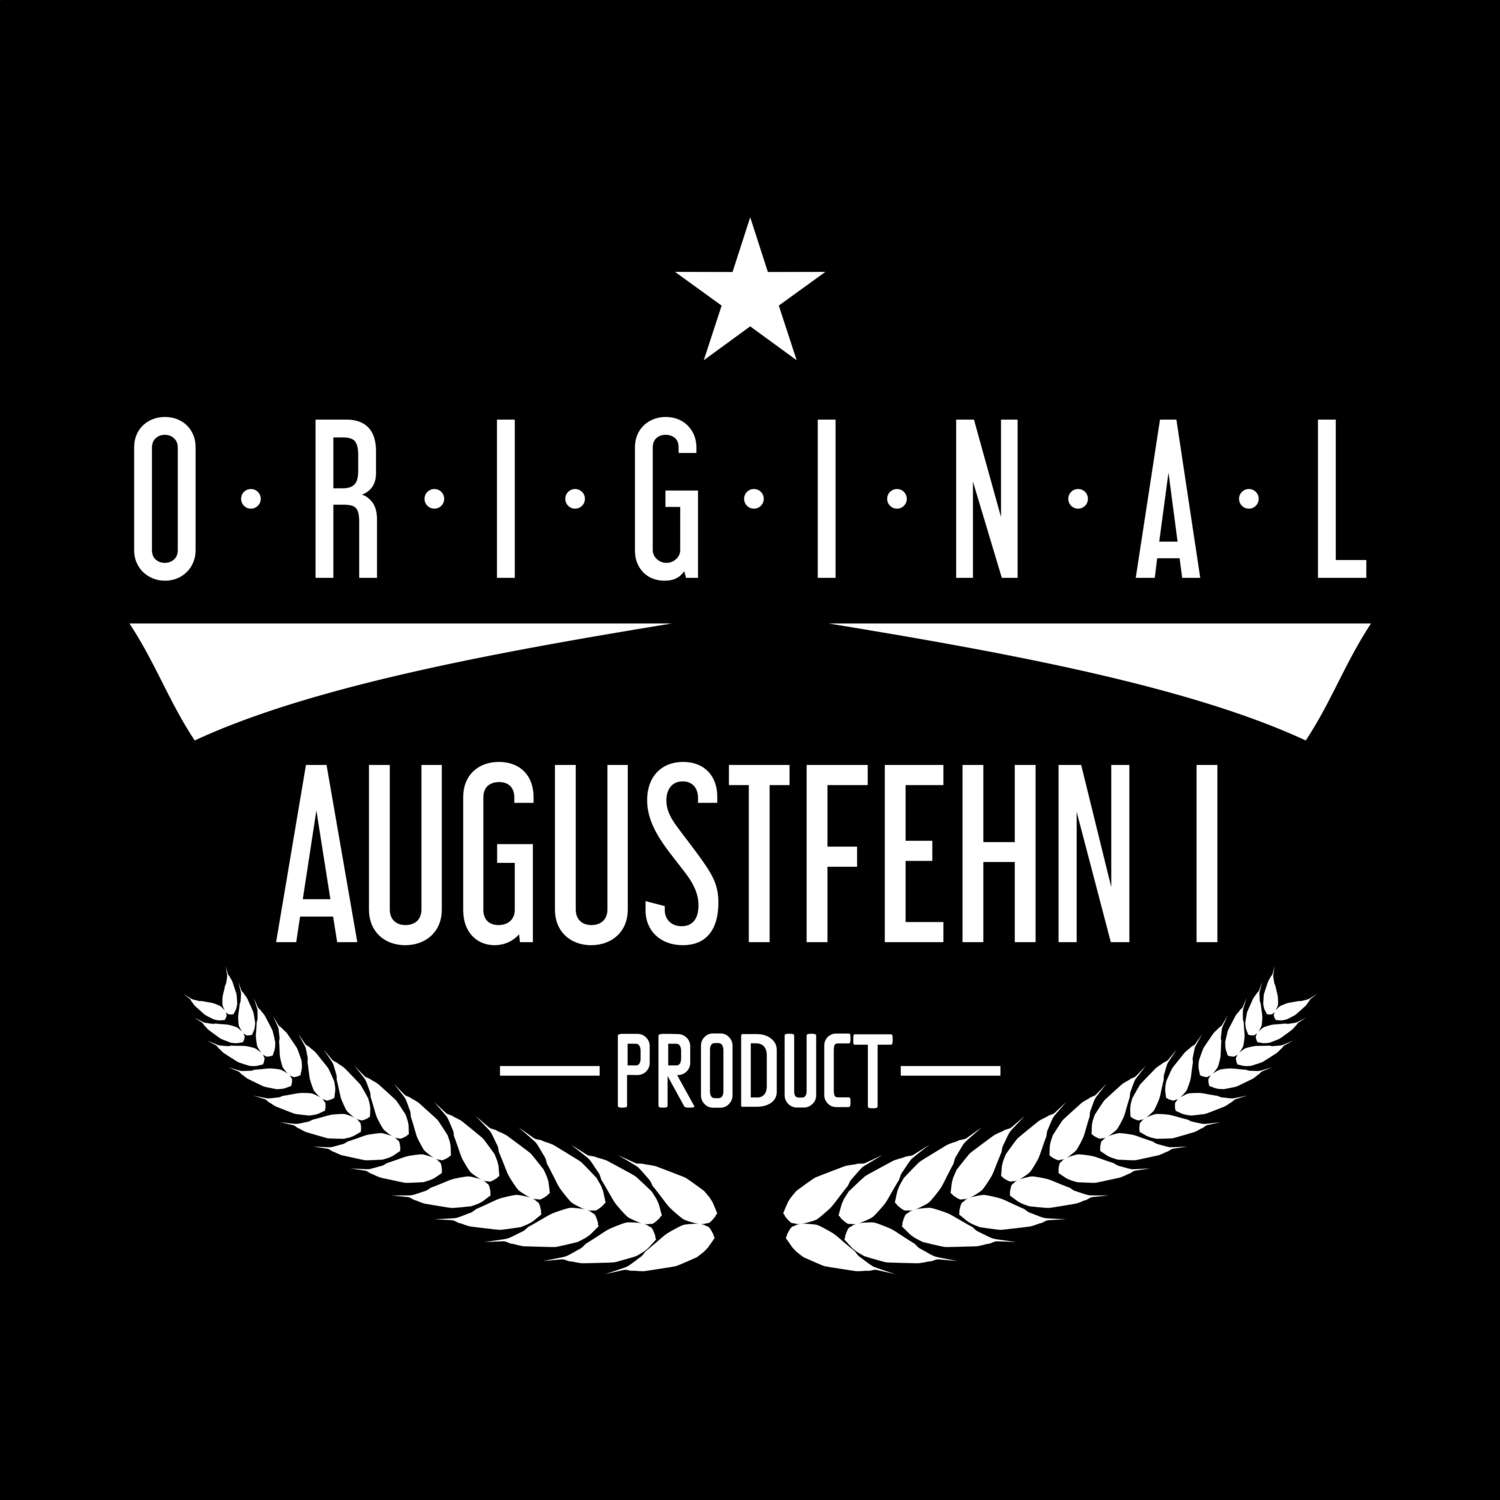 Augustfehn I T-Shirt »Original Product«